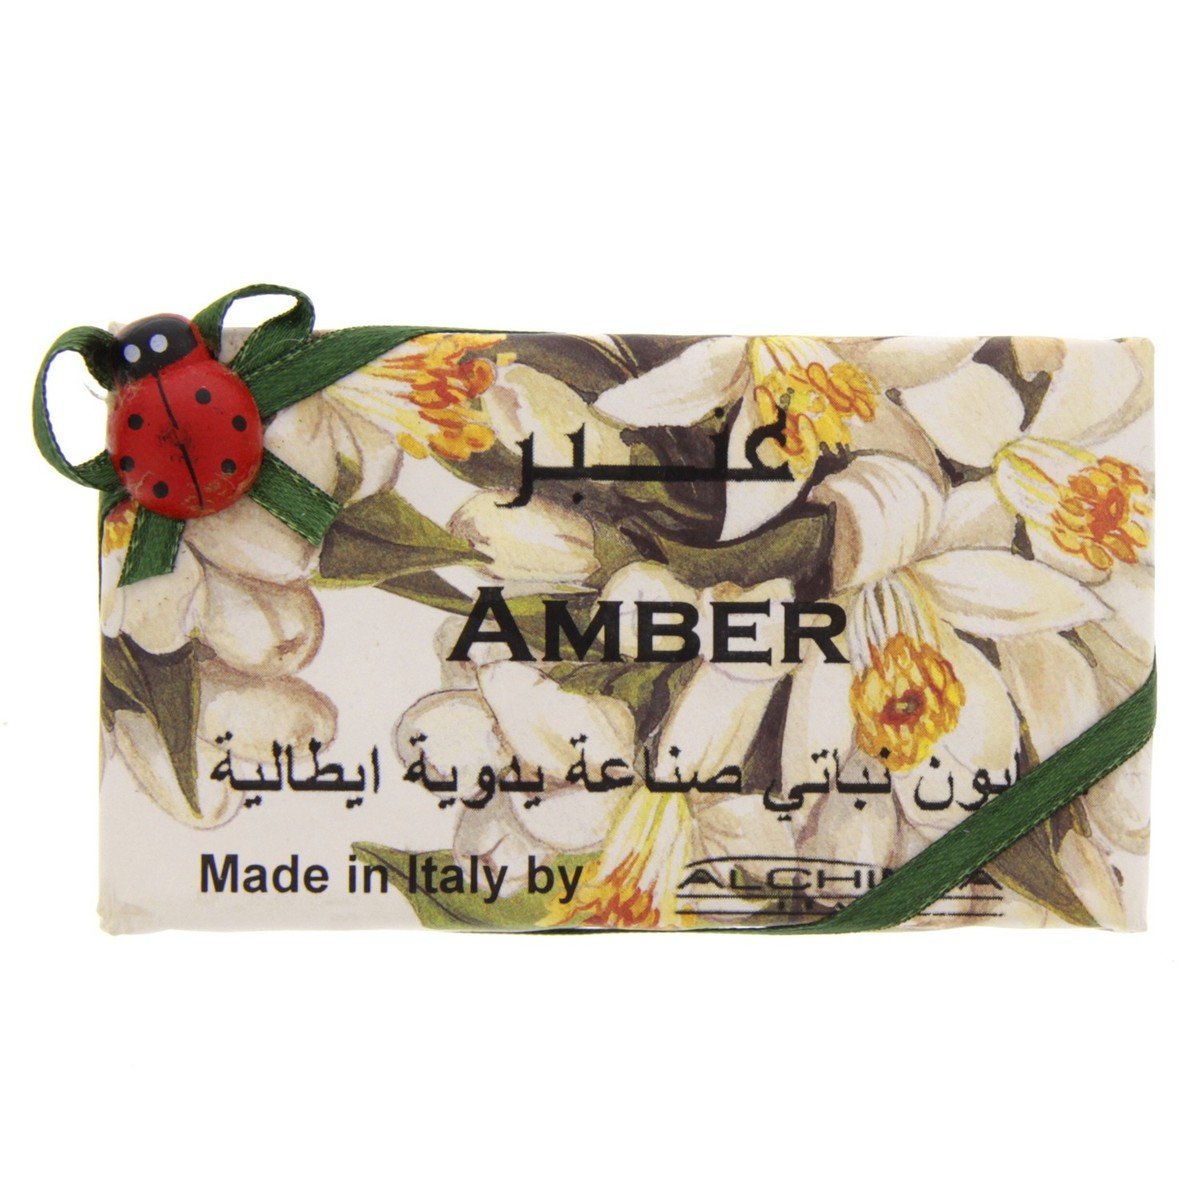 Alchimia Amber Vegetal Soap, 200 g